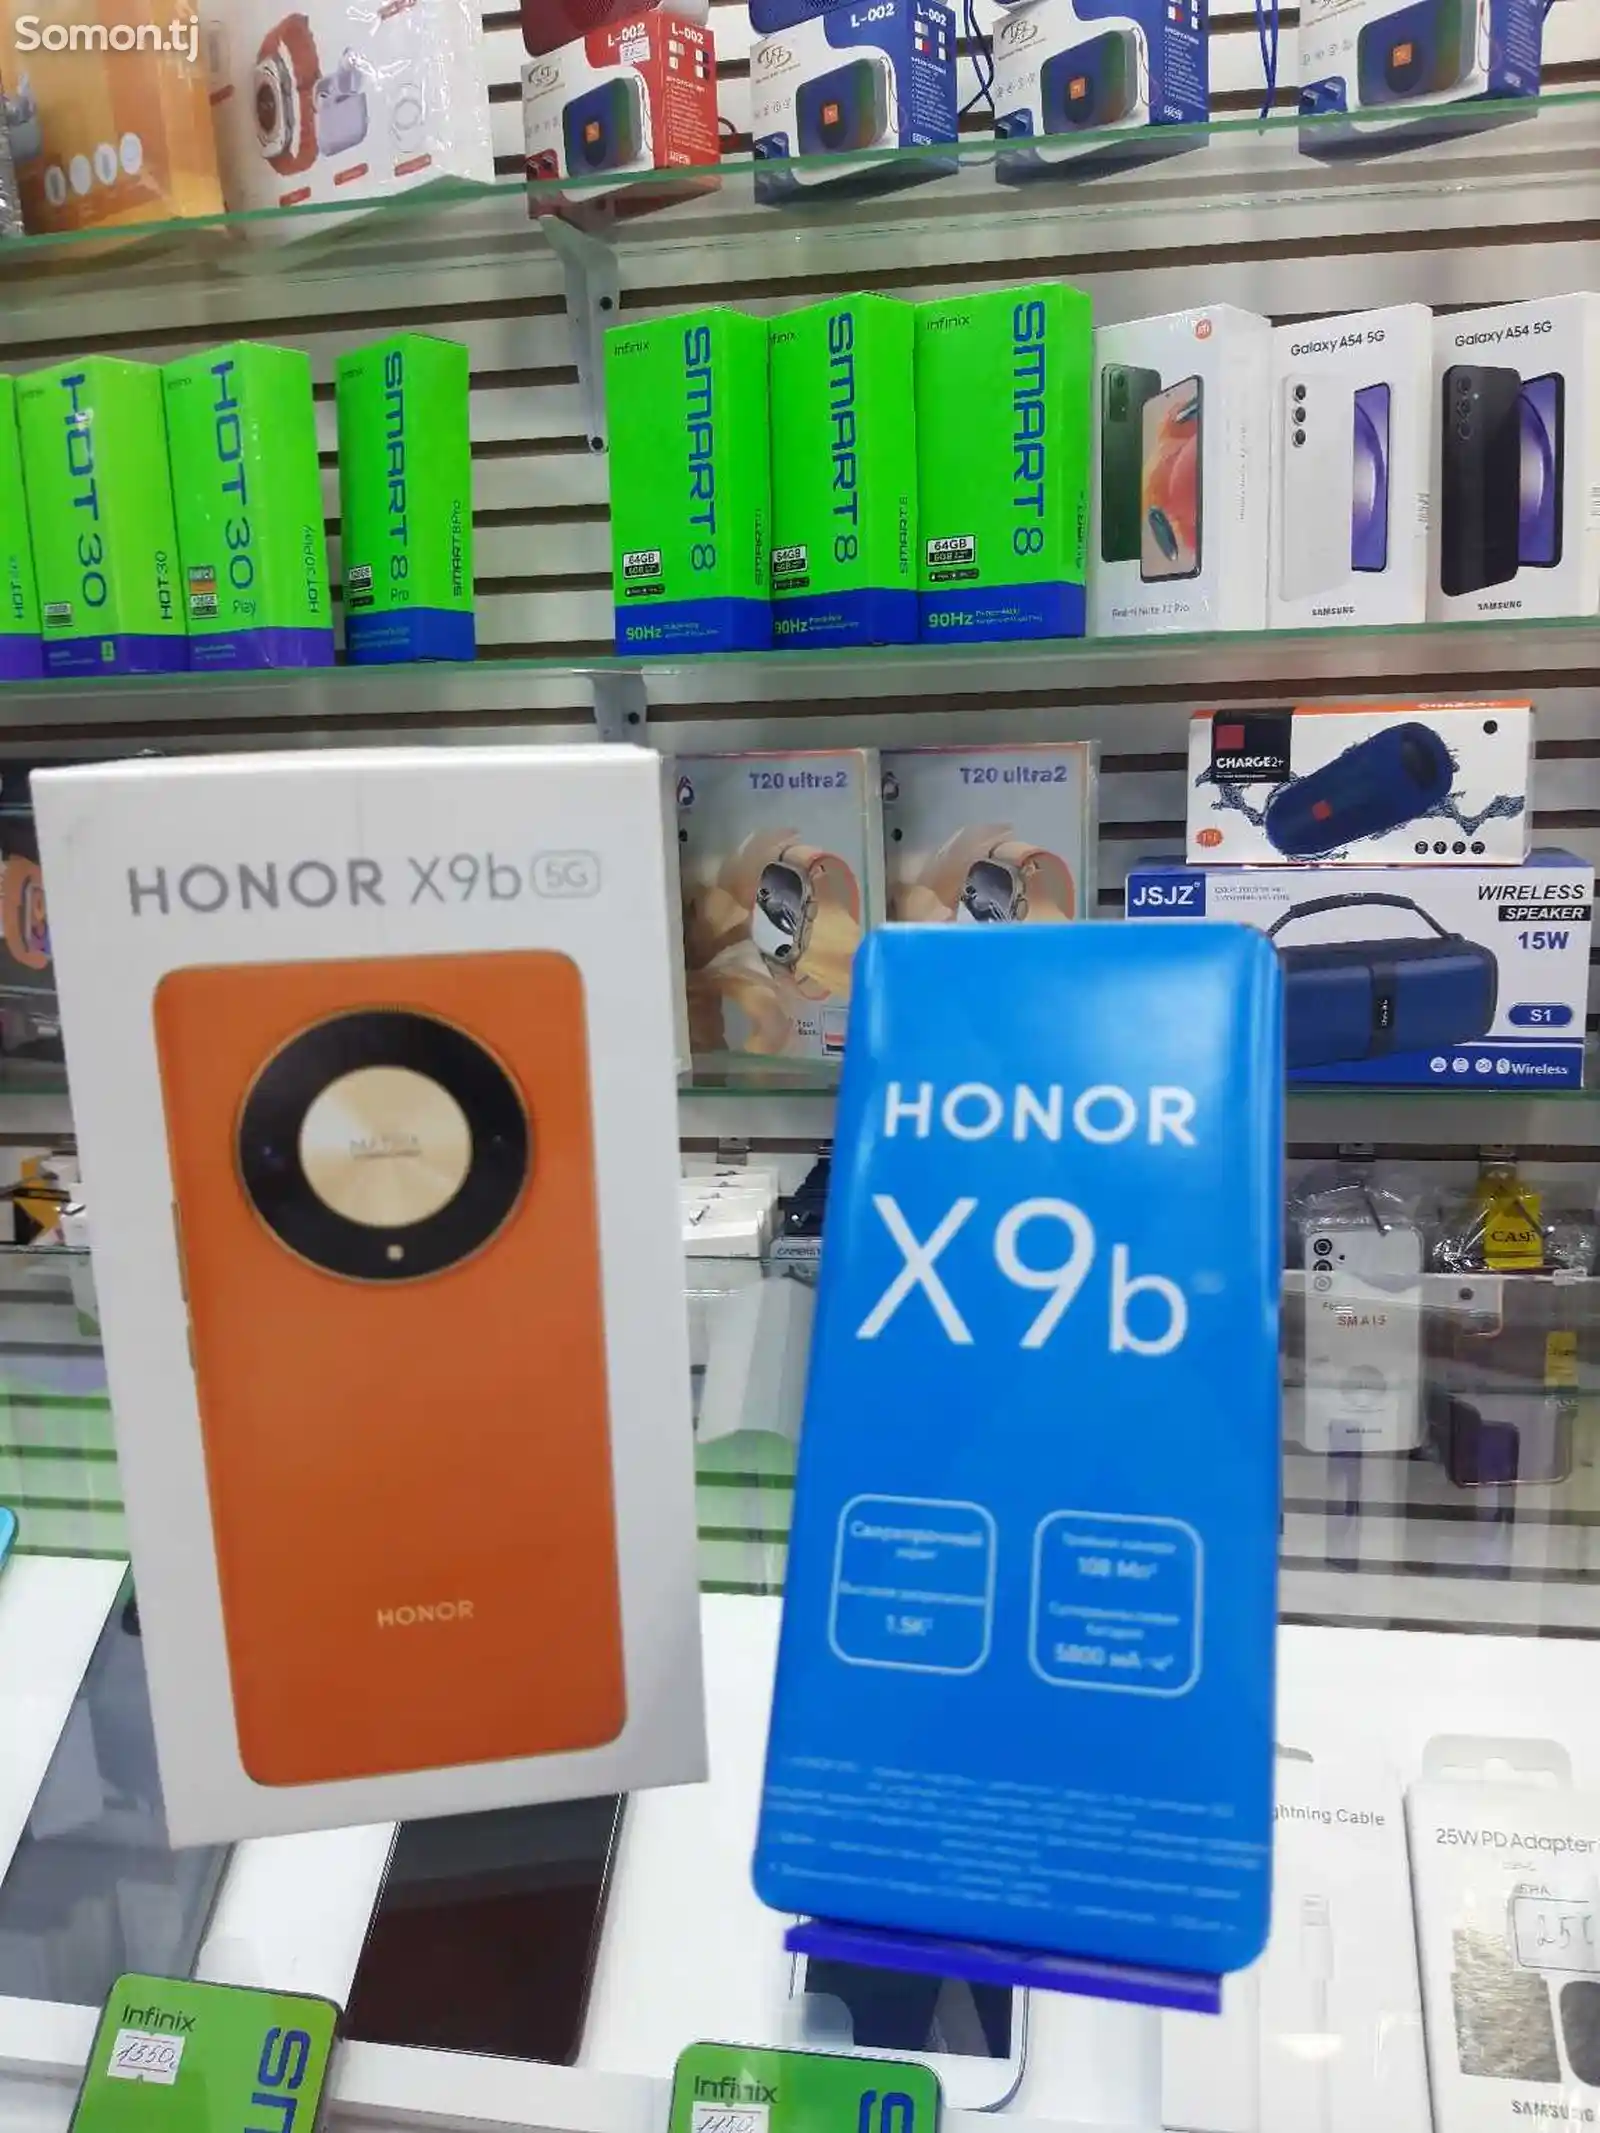 Huawei Honor X9b-1